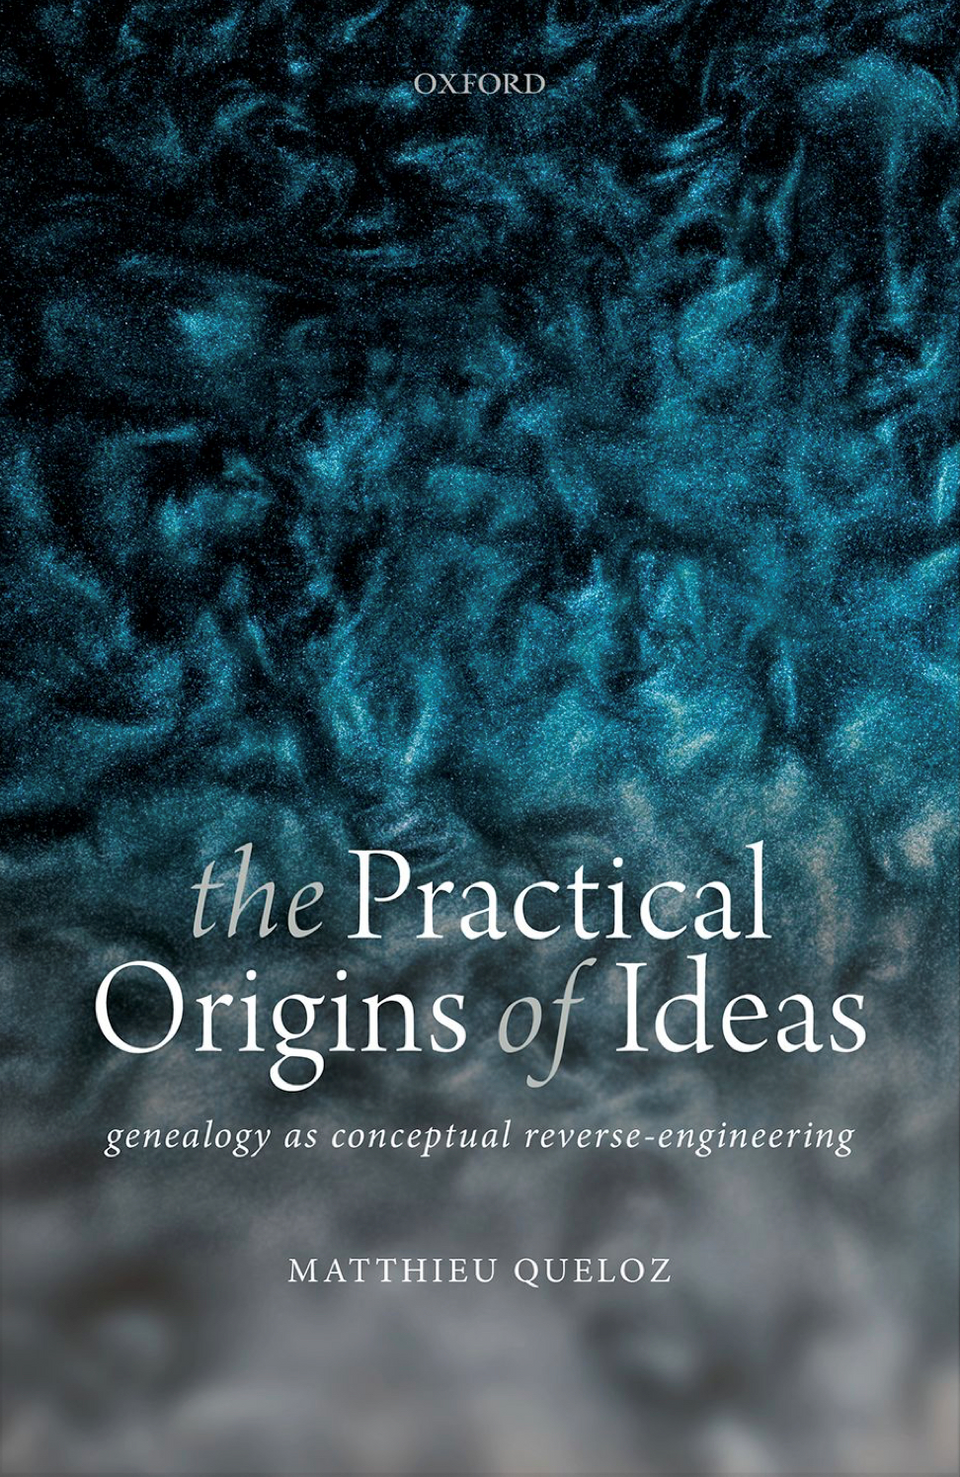 The Practical Origins of Ideas (Oxford University Press)